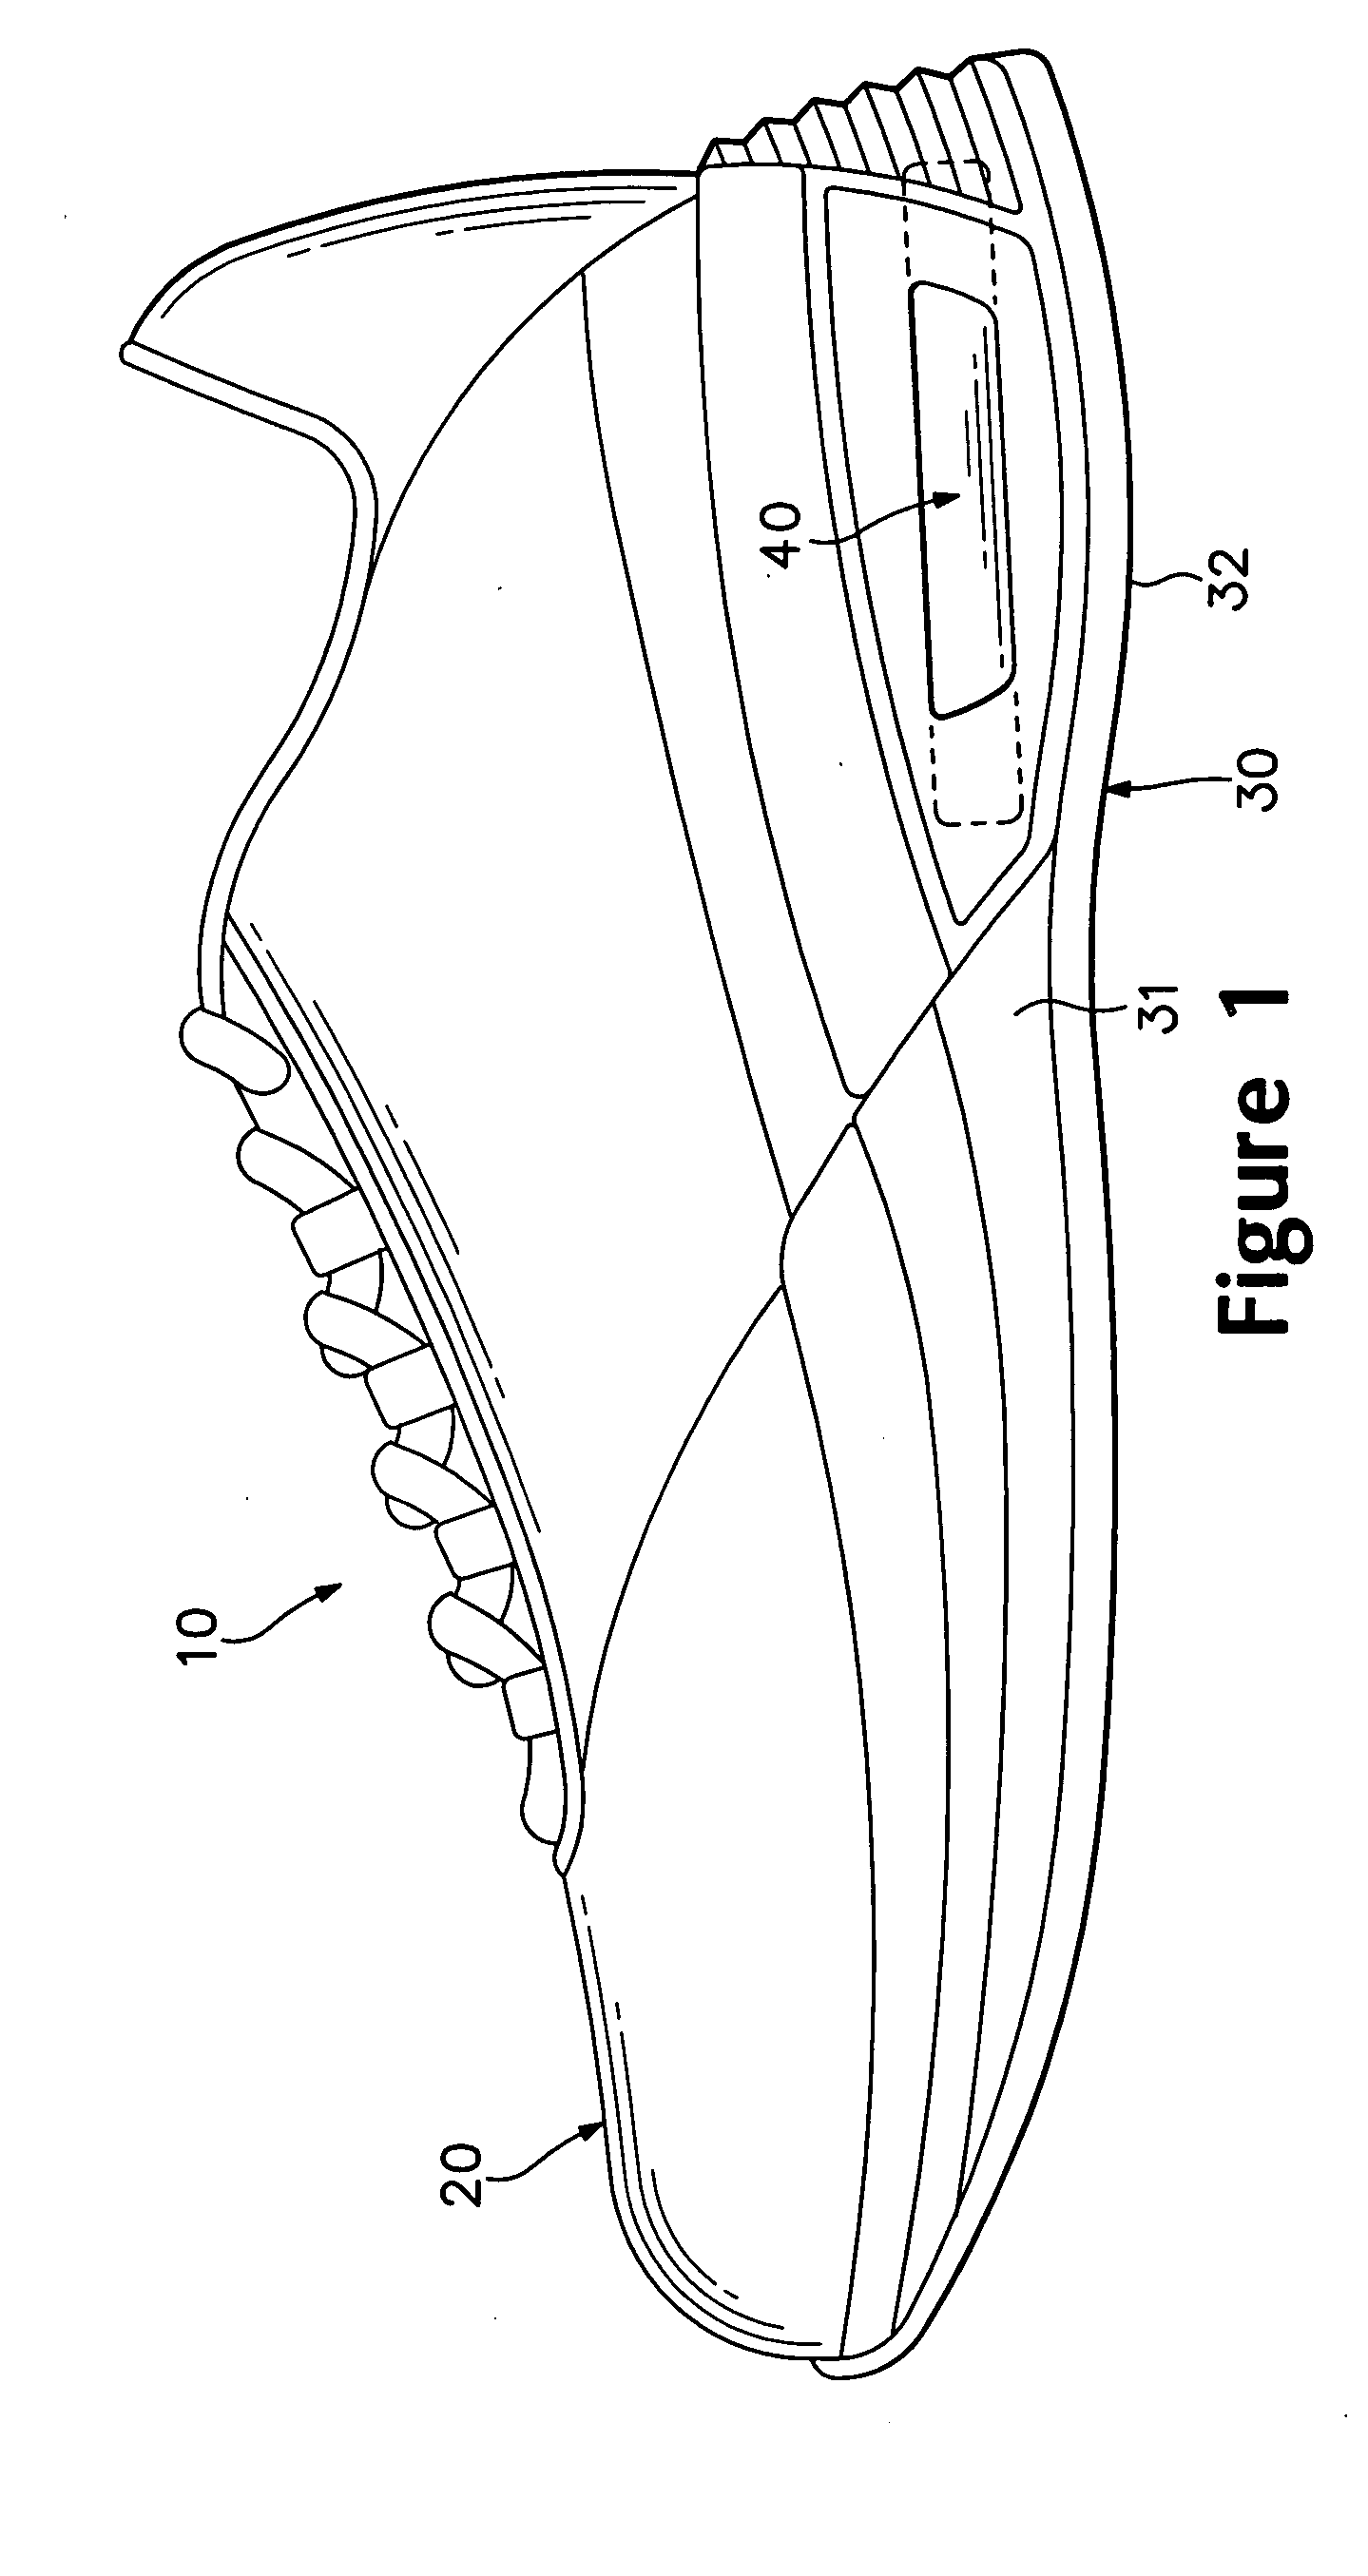 Flexible fluid-filled bladder for an article of footwear